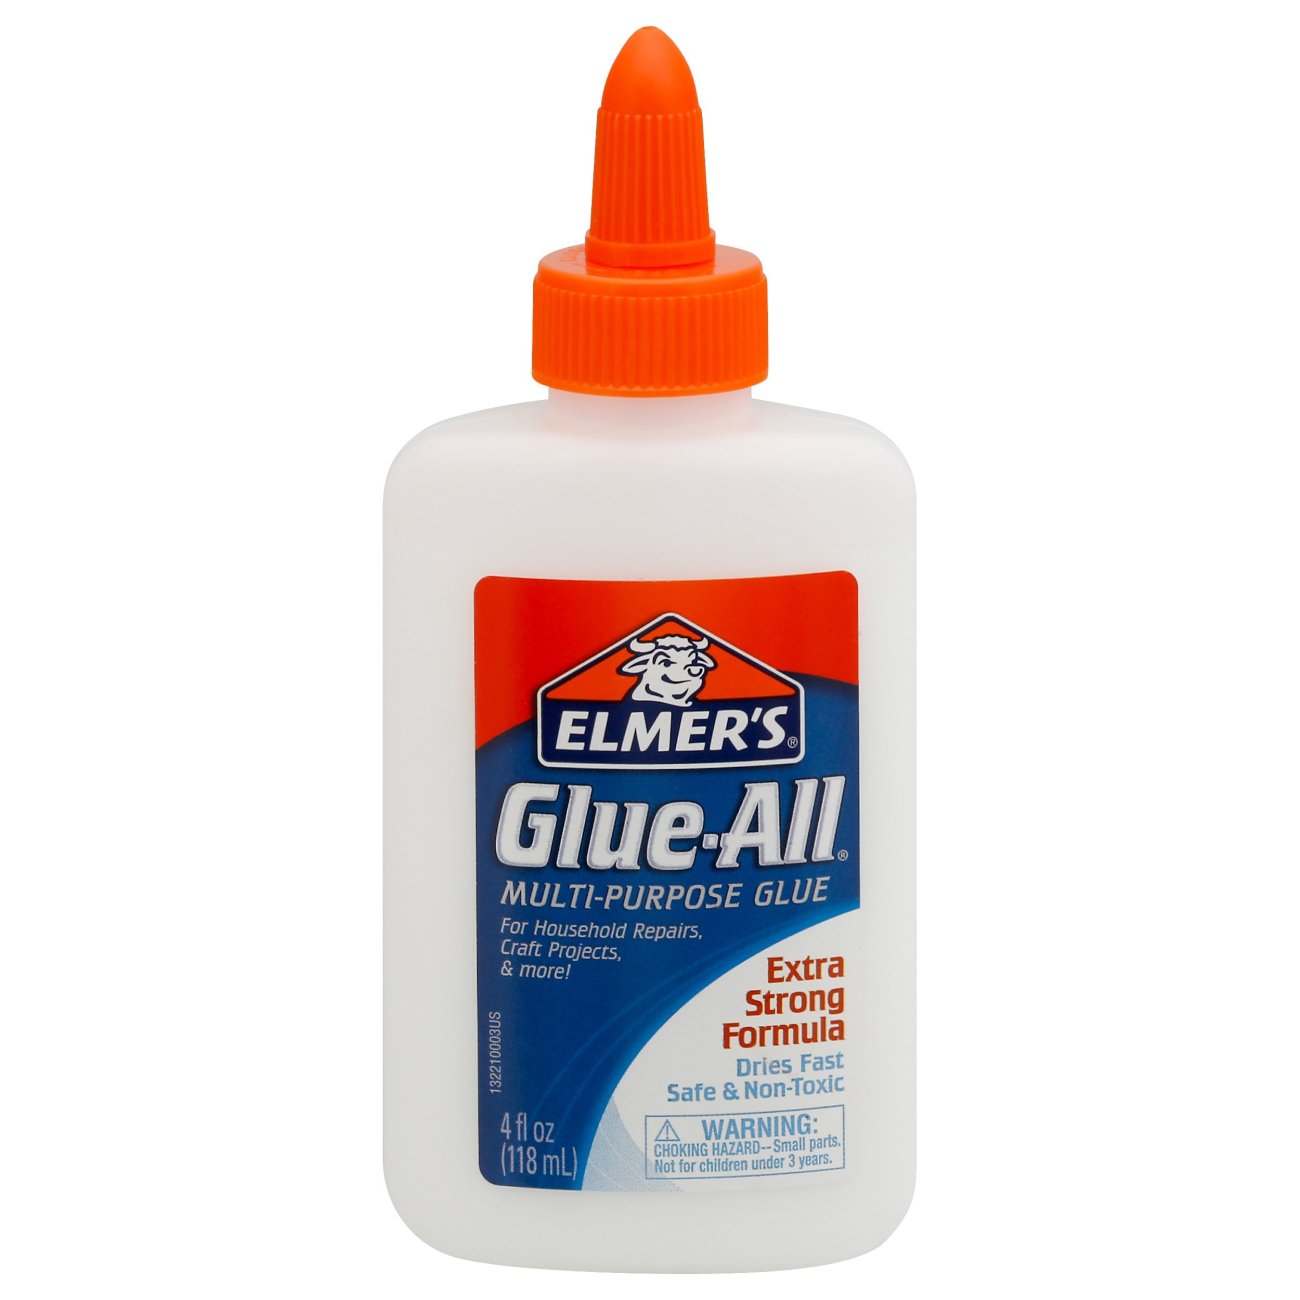 Elmer's Glow In The Dark Liquid Glue - Blue - Shop Glue at H-E-B